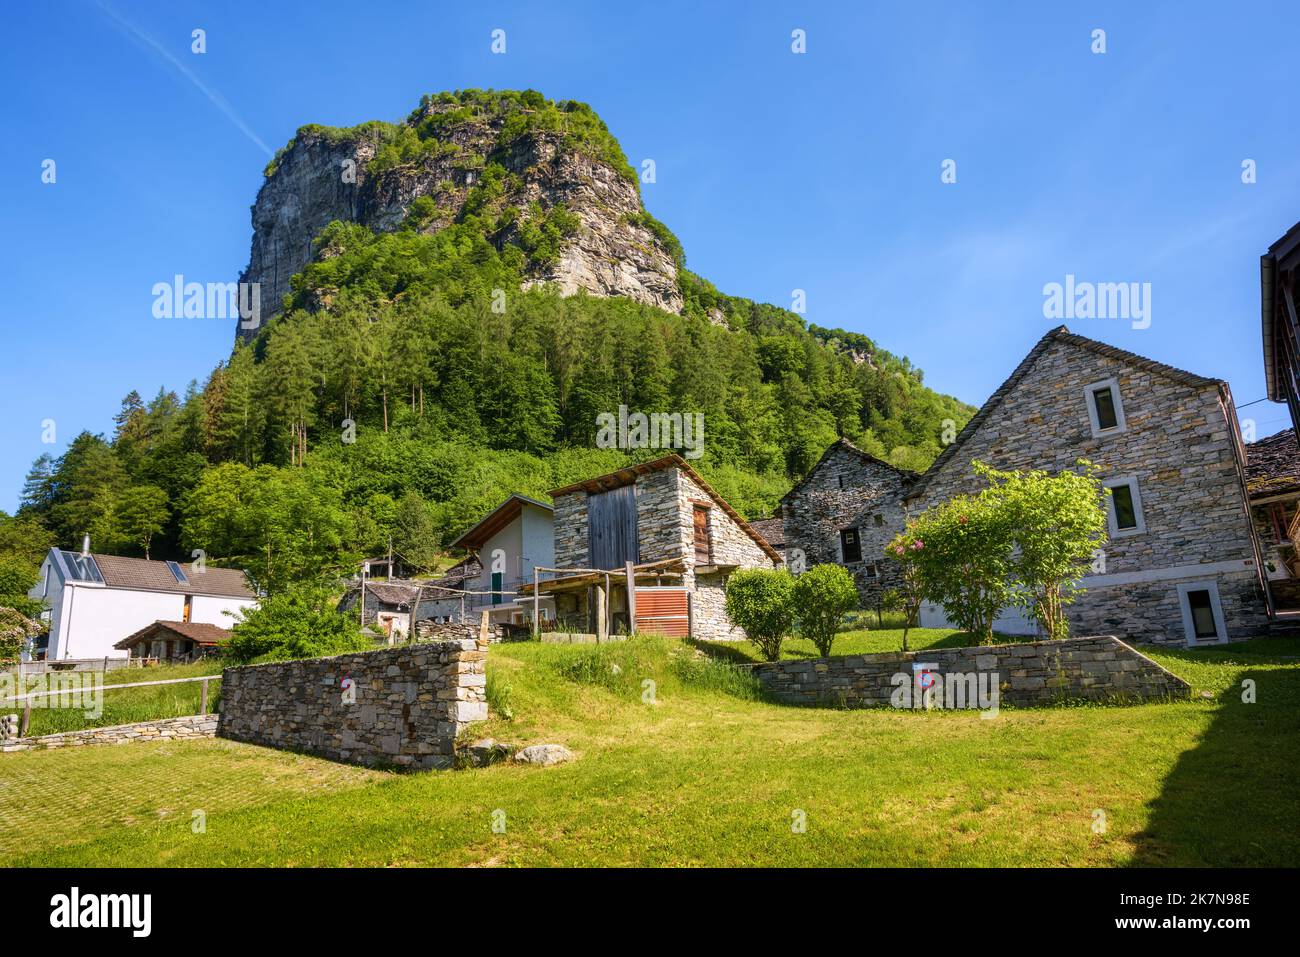 Traditional rustic stone alpine huts beneath a picturesque mountain in Brione village, Verzasca valley, Alps mountains, canton Ticino, Switzerland Stock Photo